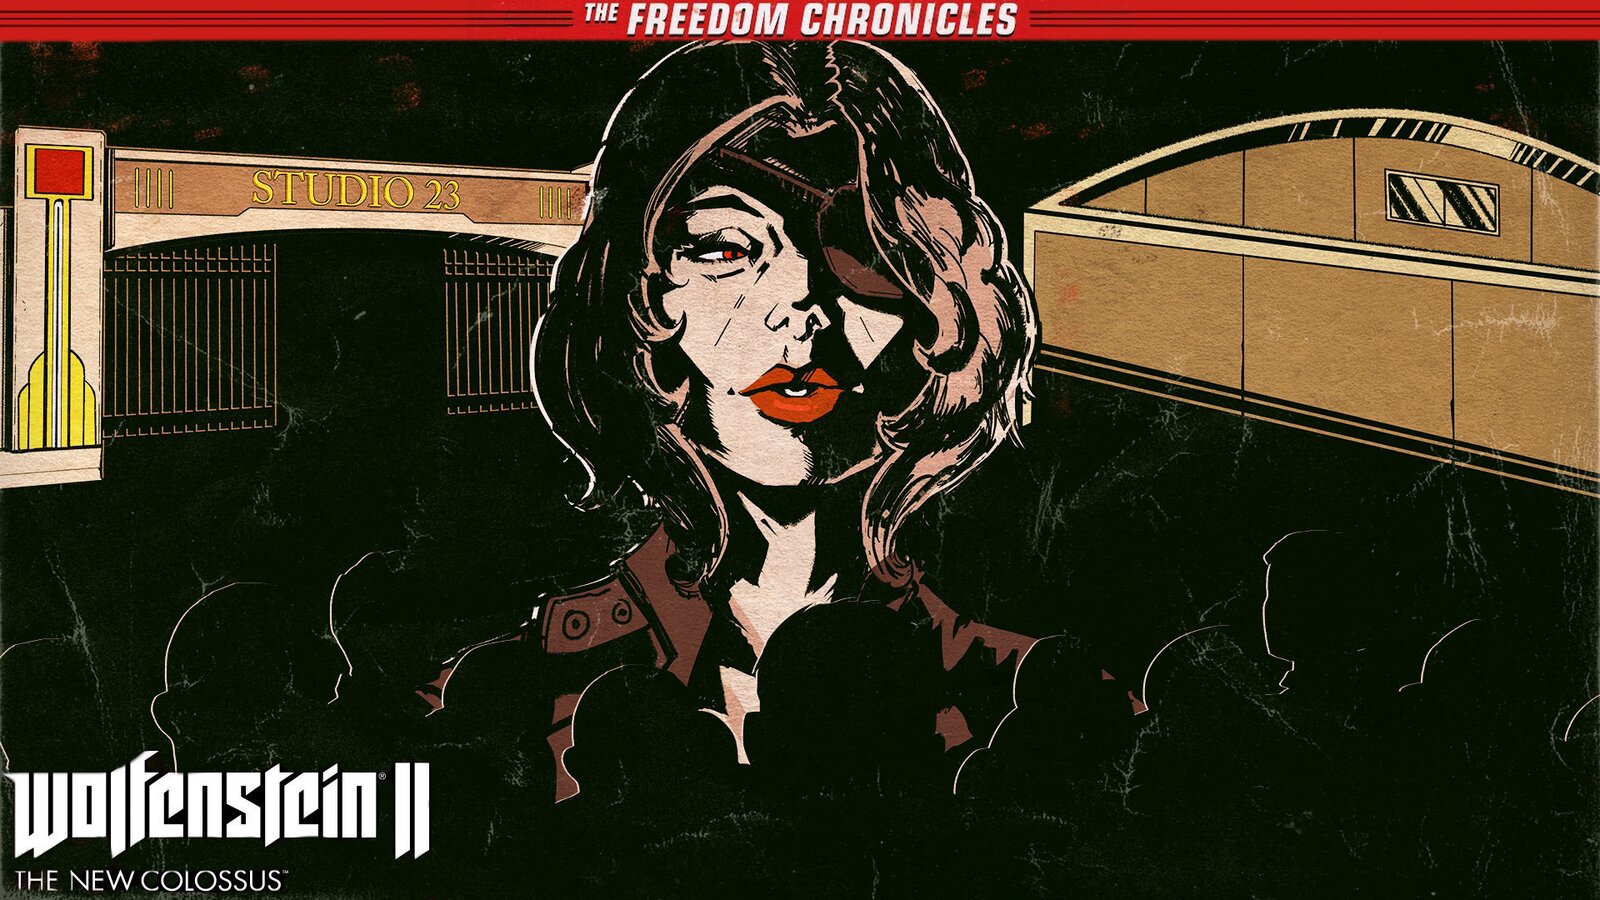 Wolfenstein II: The Freedom Chronicles - Episode 2